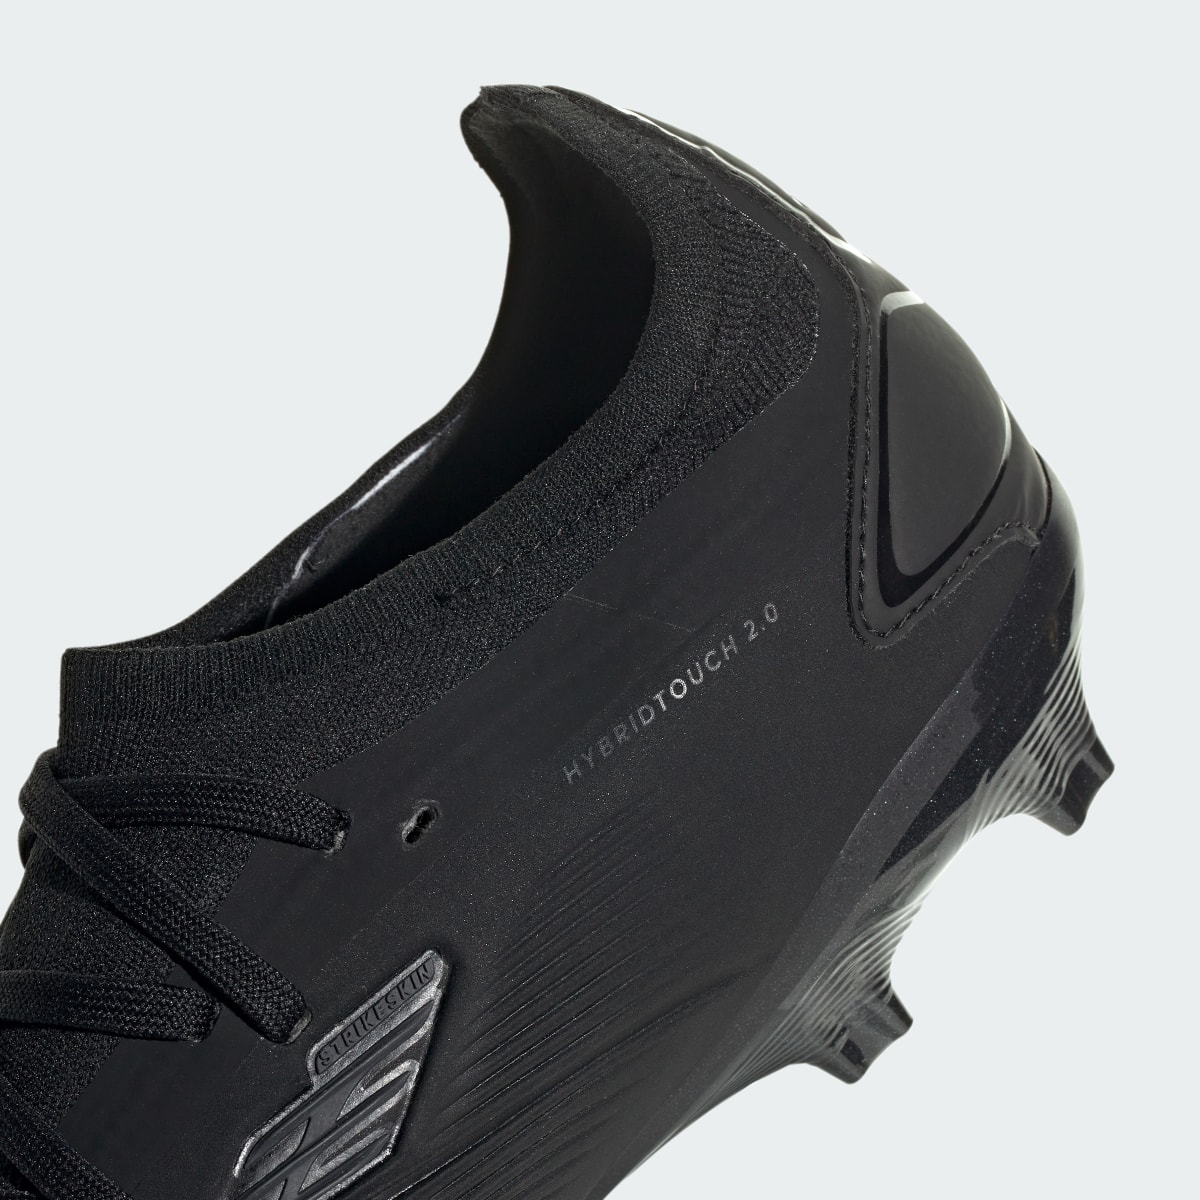 Adidas Chaussure Predator 24 Pro Terrain souple. 10